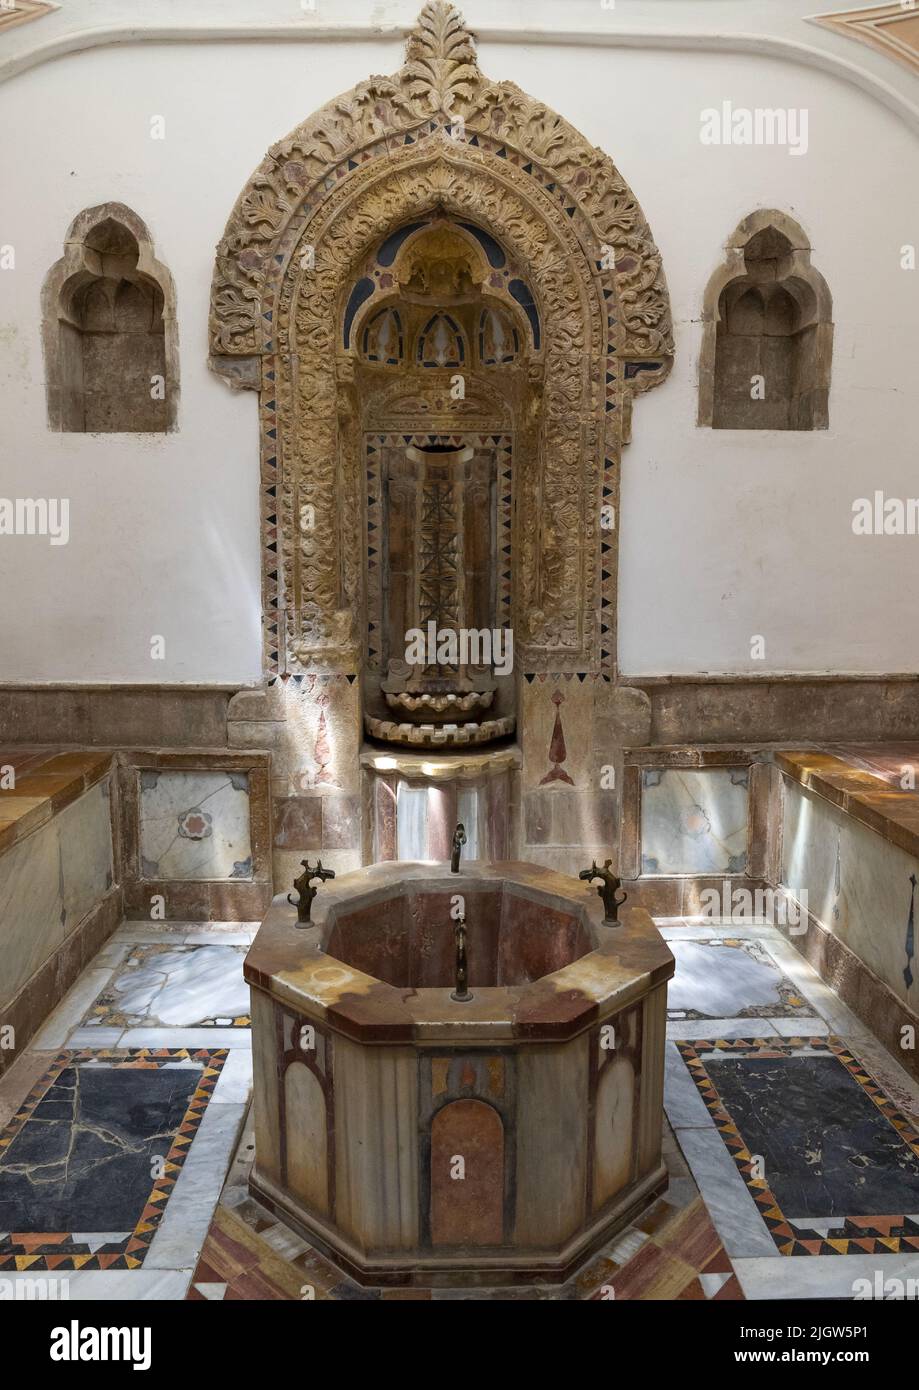 Beiteddine Palace baths, Mount Lebanon Governorate, Beit ed-Dine, Lebanon Stock Photo